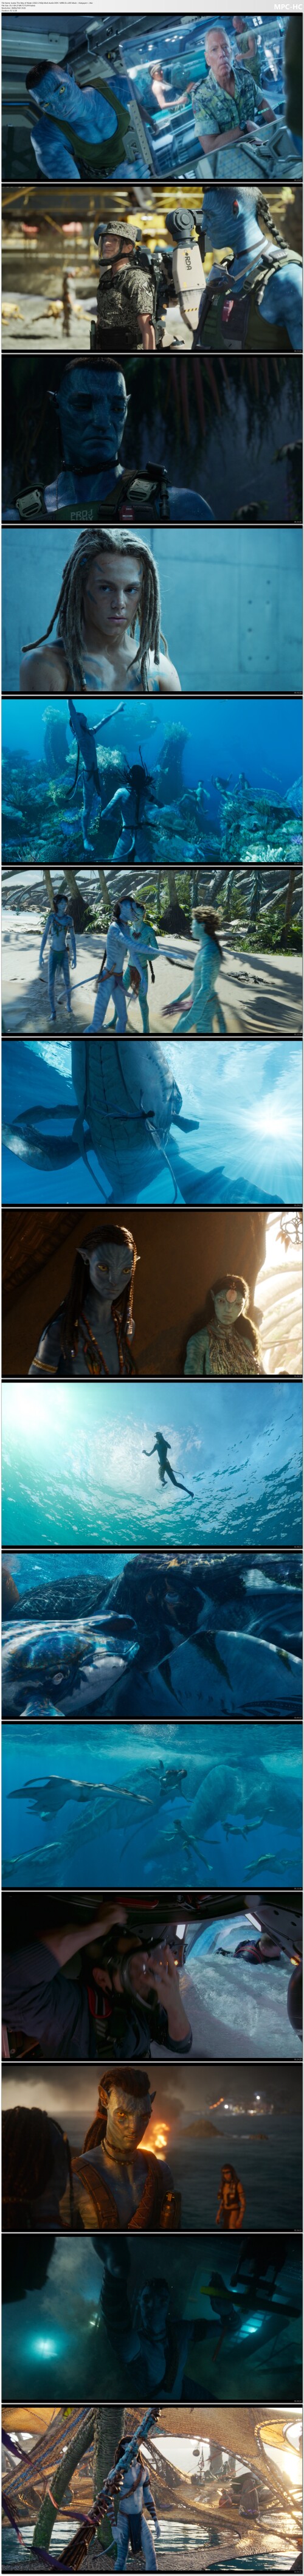 Avatar The Way of Water (2022) 2160p Multi Audio DD5.1 WEB DL x265 Msub =Katyayan= .mkv thumbs